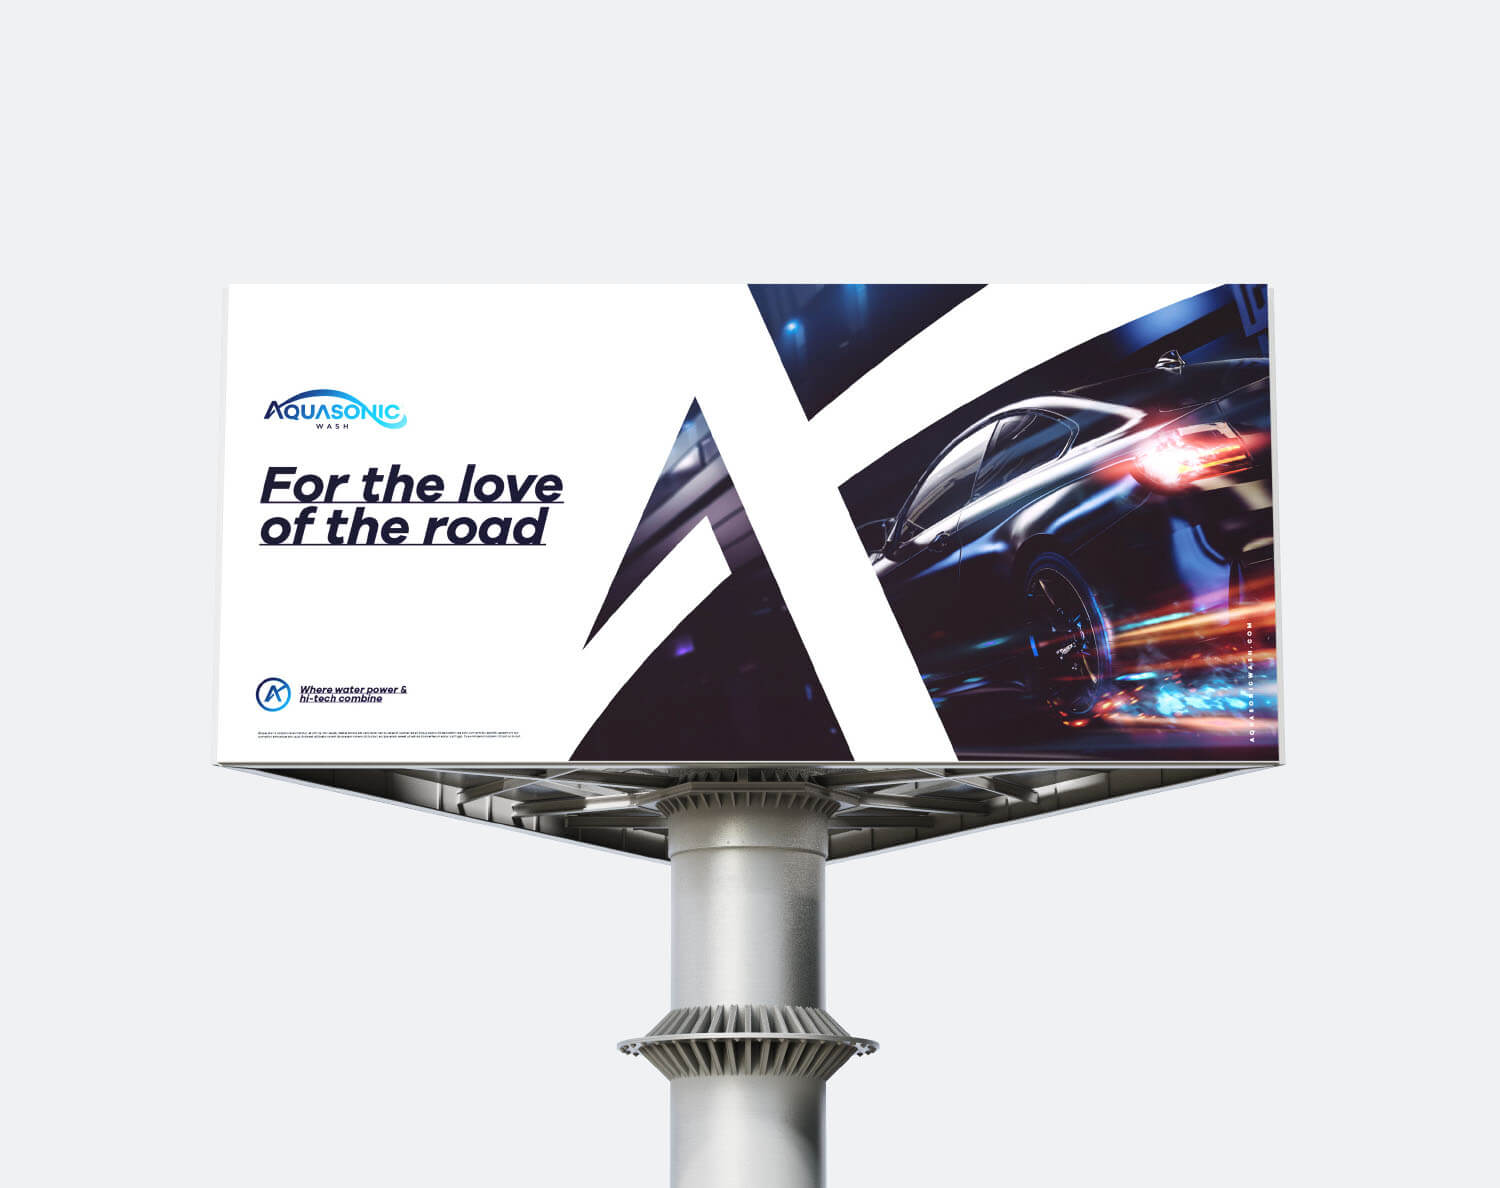 billboard advertising and signage design for Aquasonic carwash